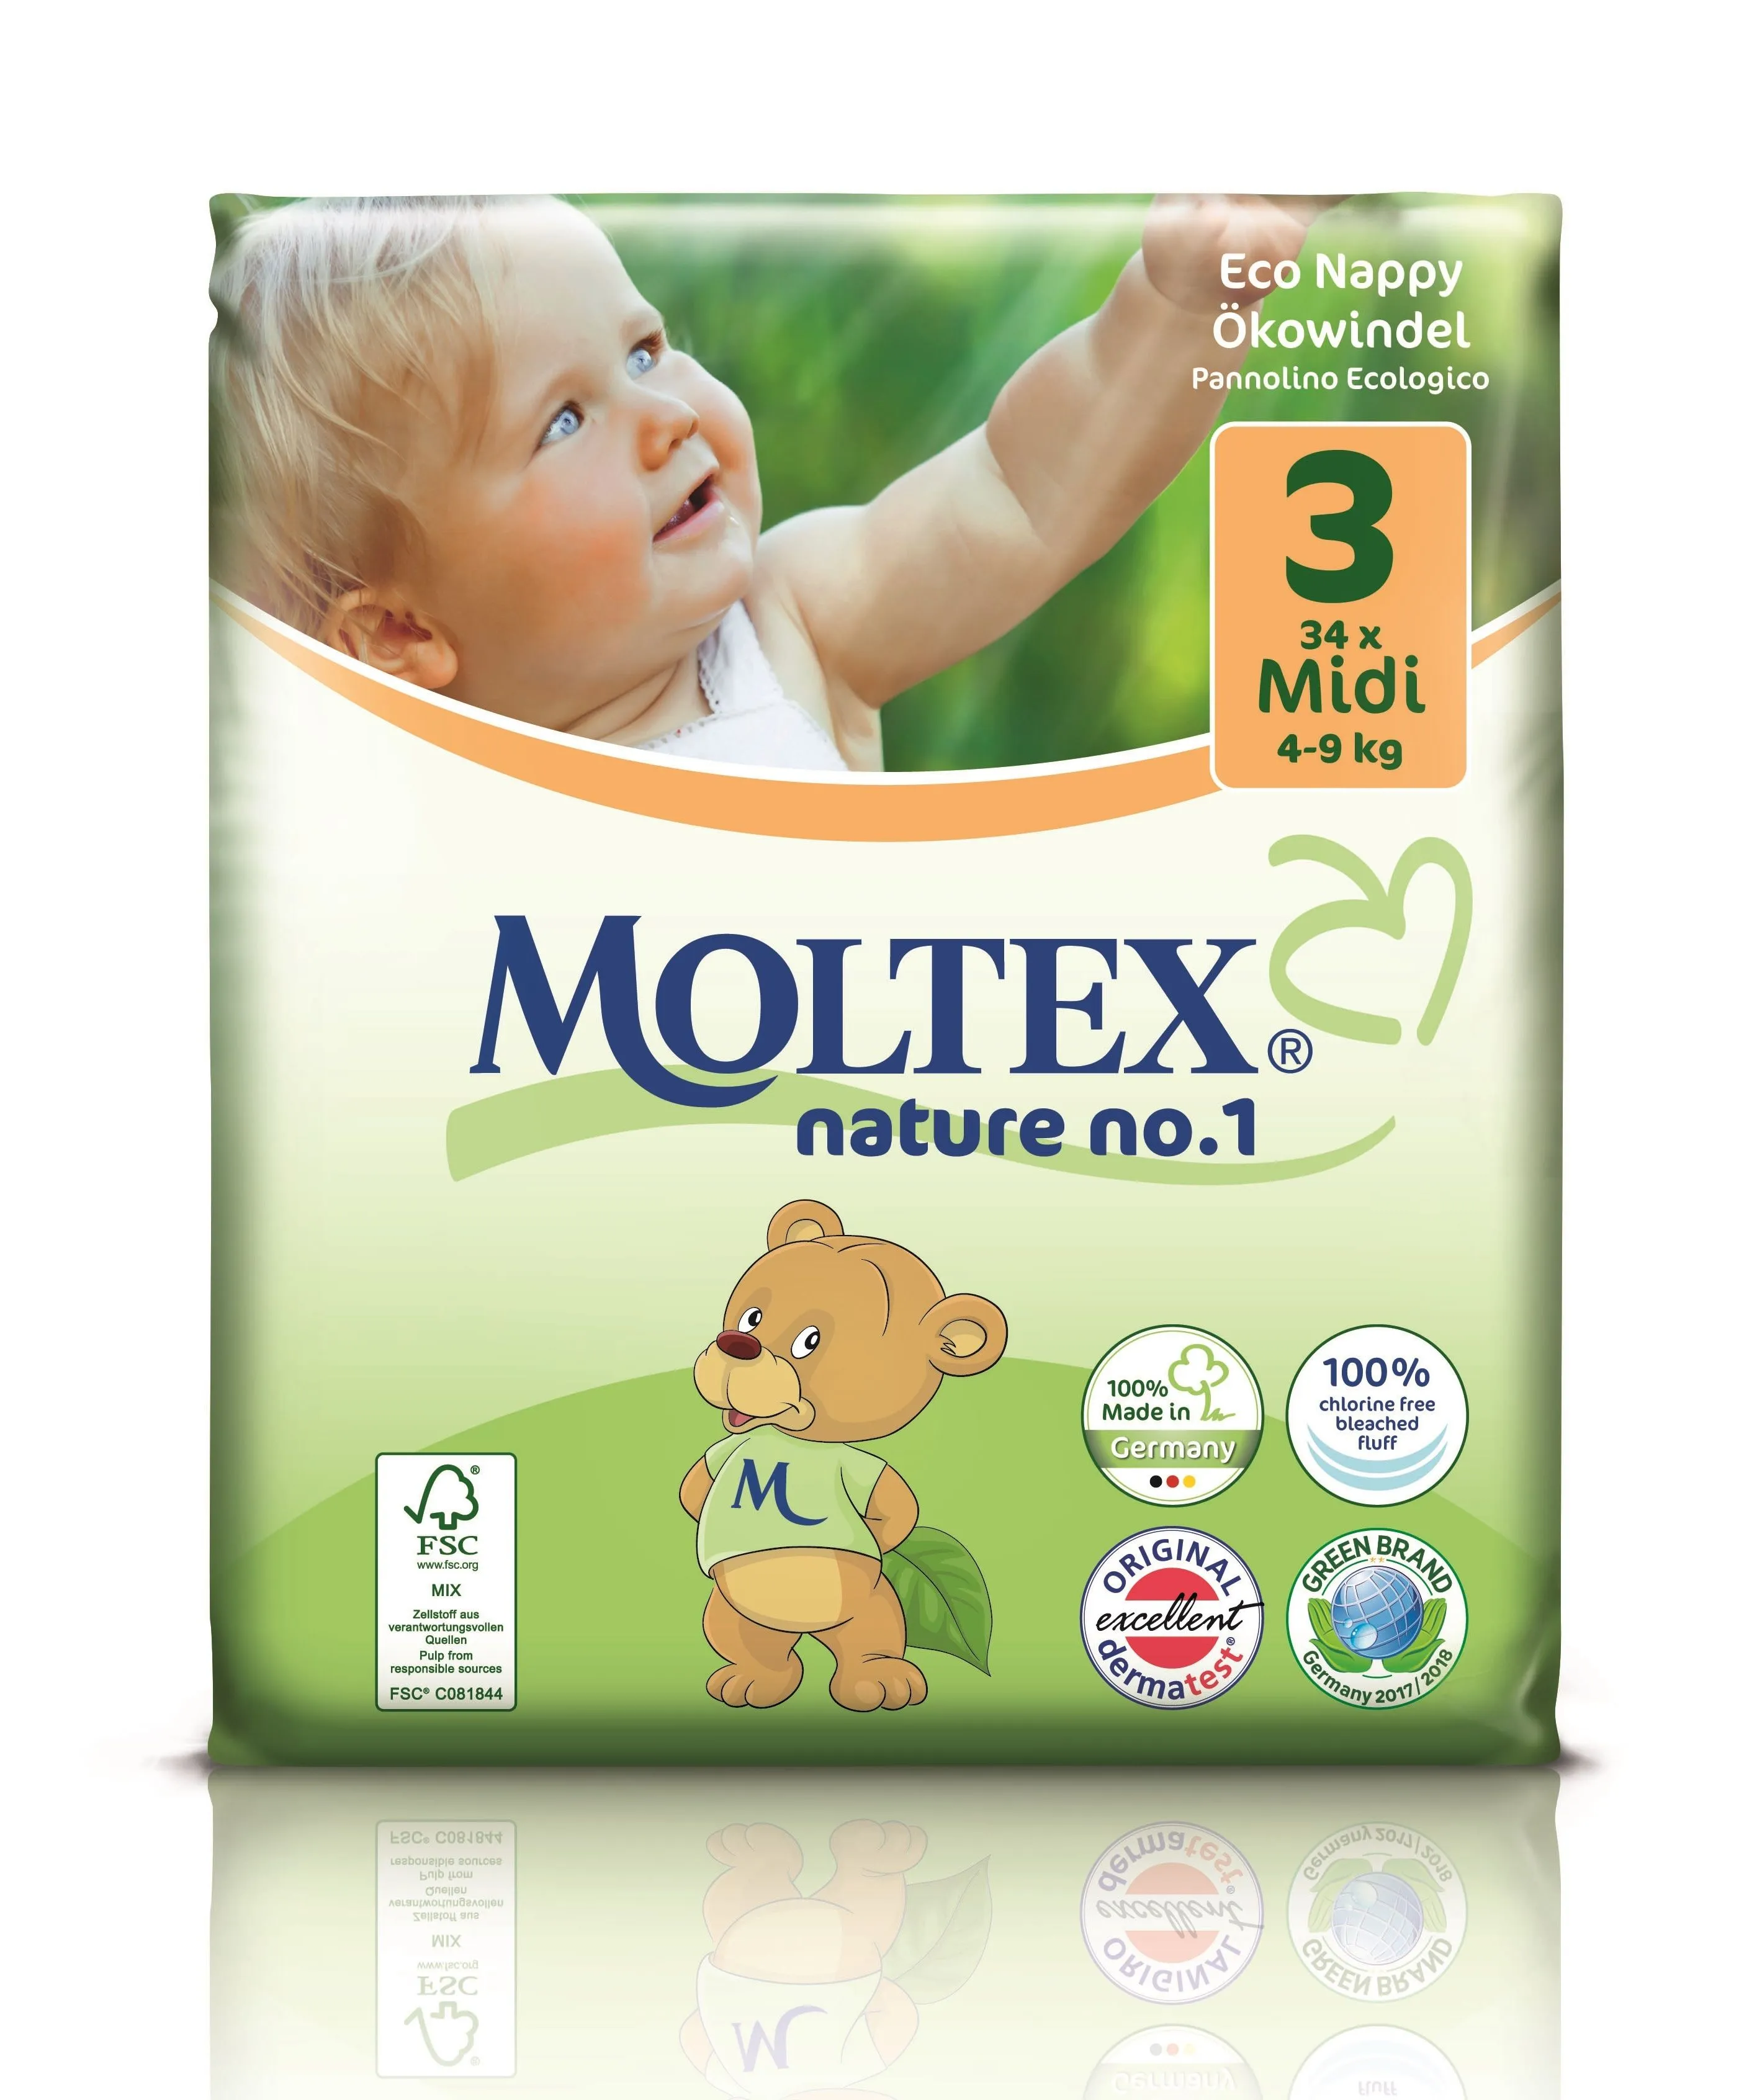 Moltex nature no.1 Midi 4-9 kg dětské plenky 34 ks